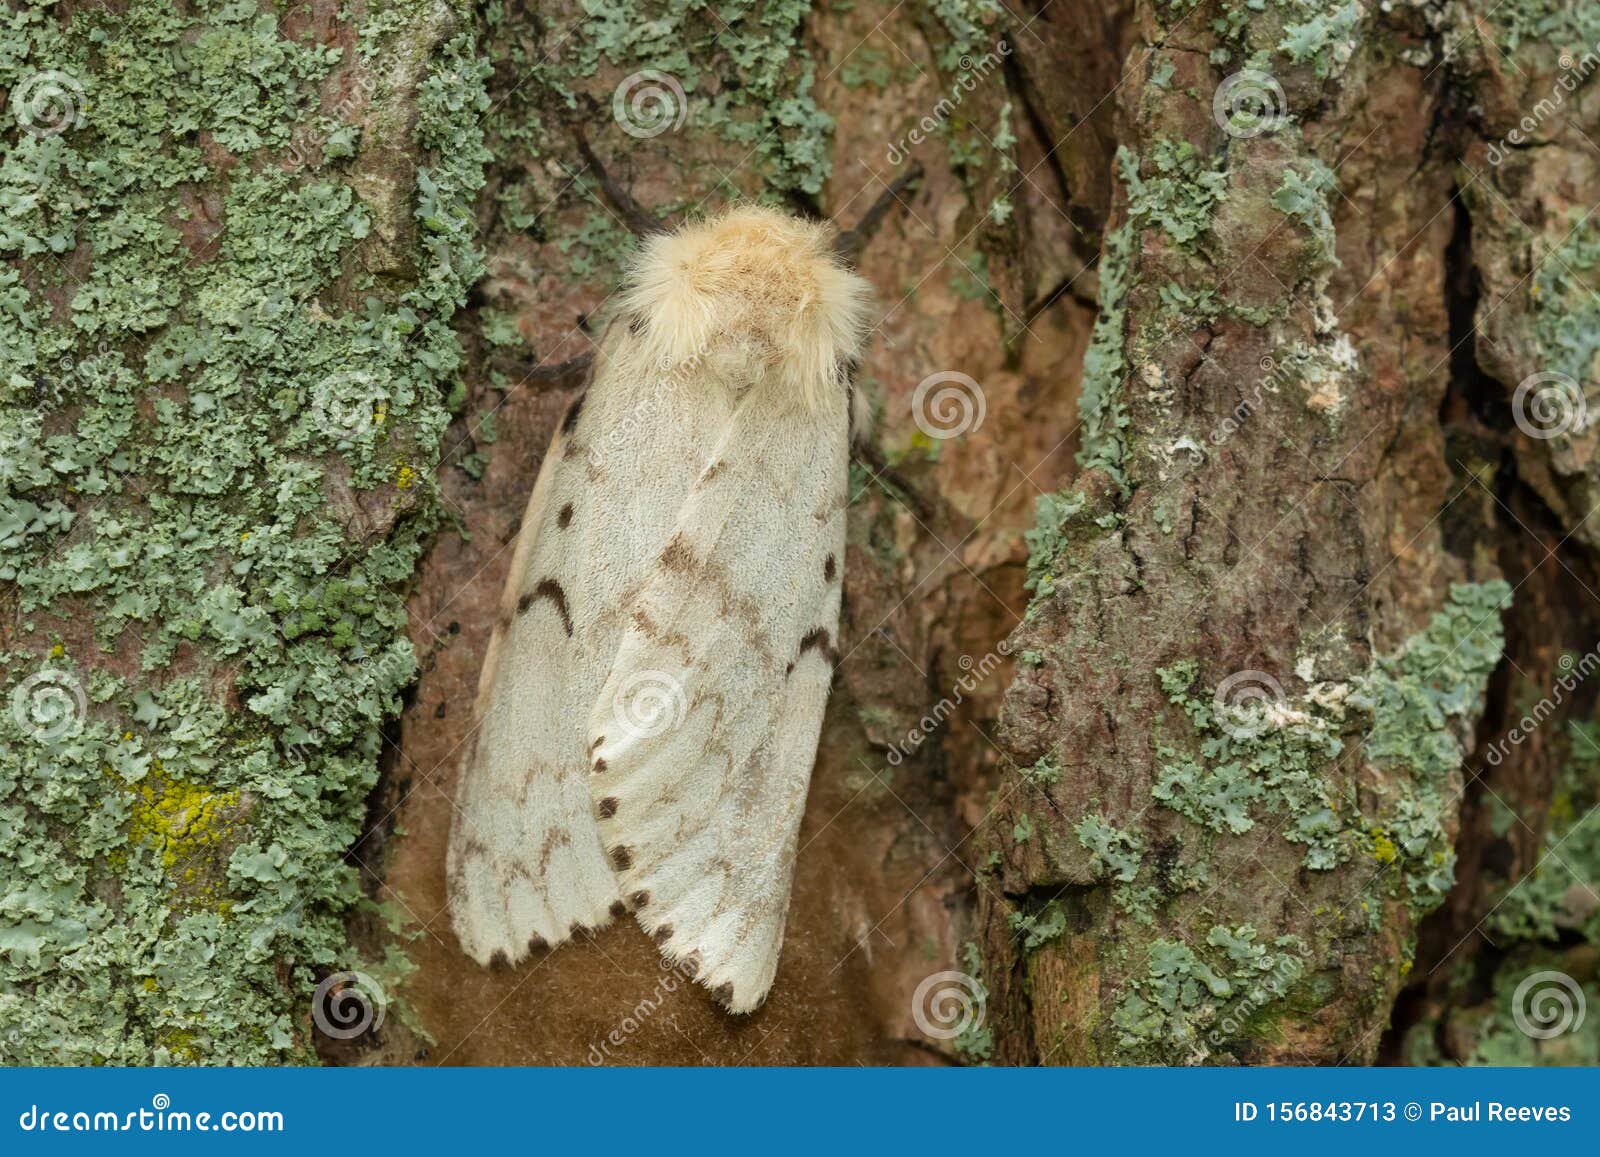 spongy moth - lymantria dispar